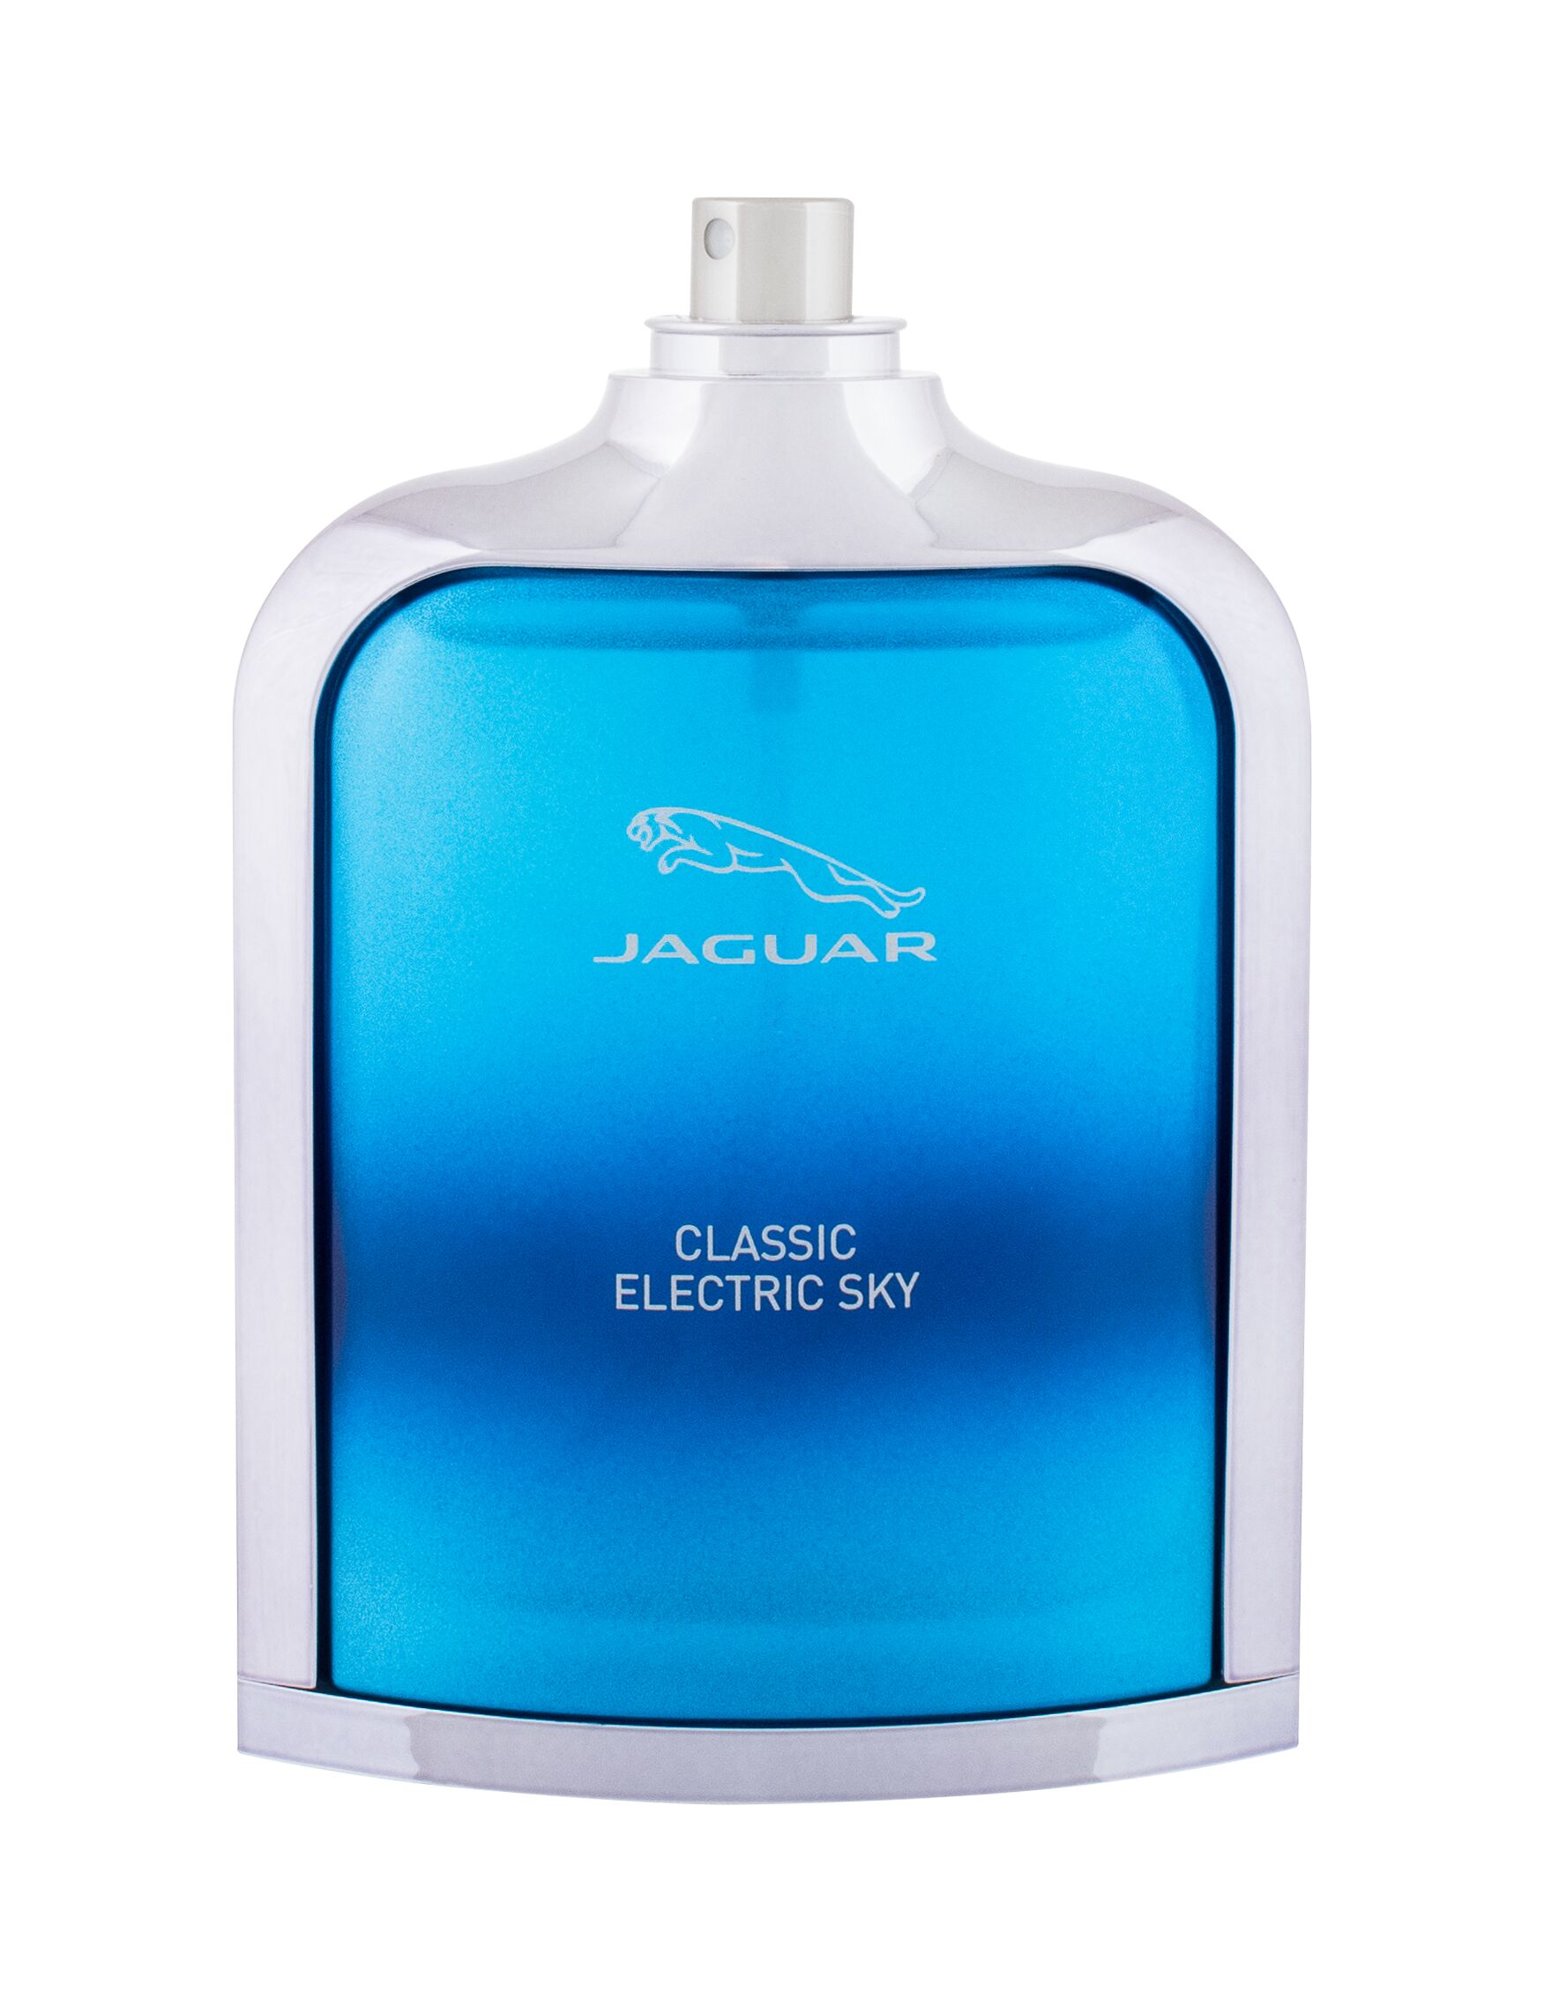 Jaguar Classic Electric Sky, Toaletní voda 100ml, Tester